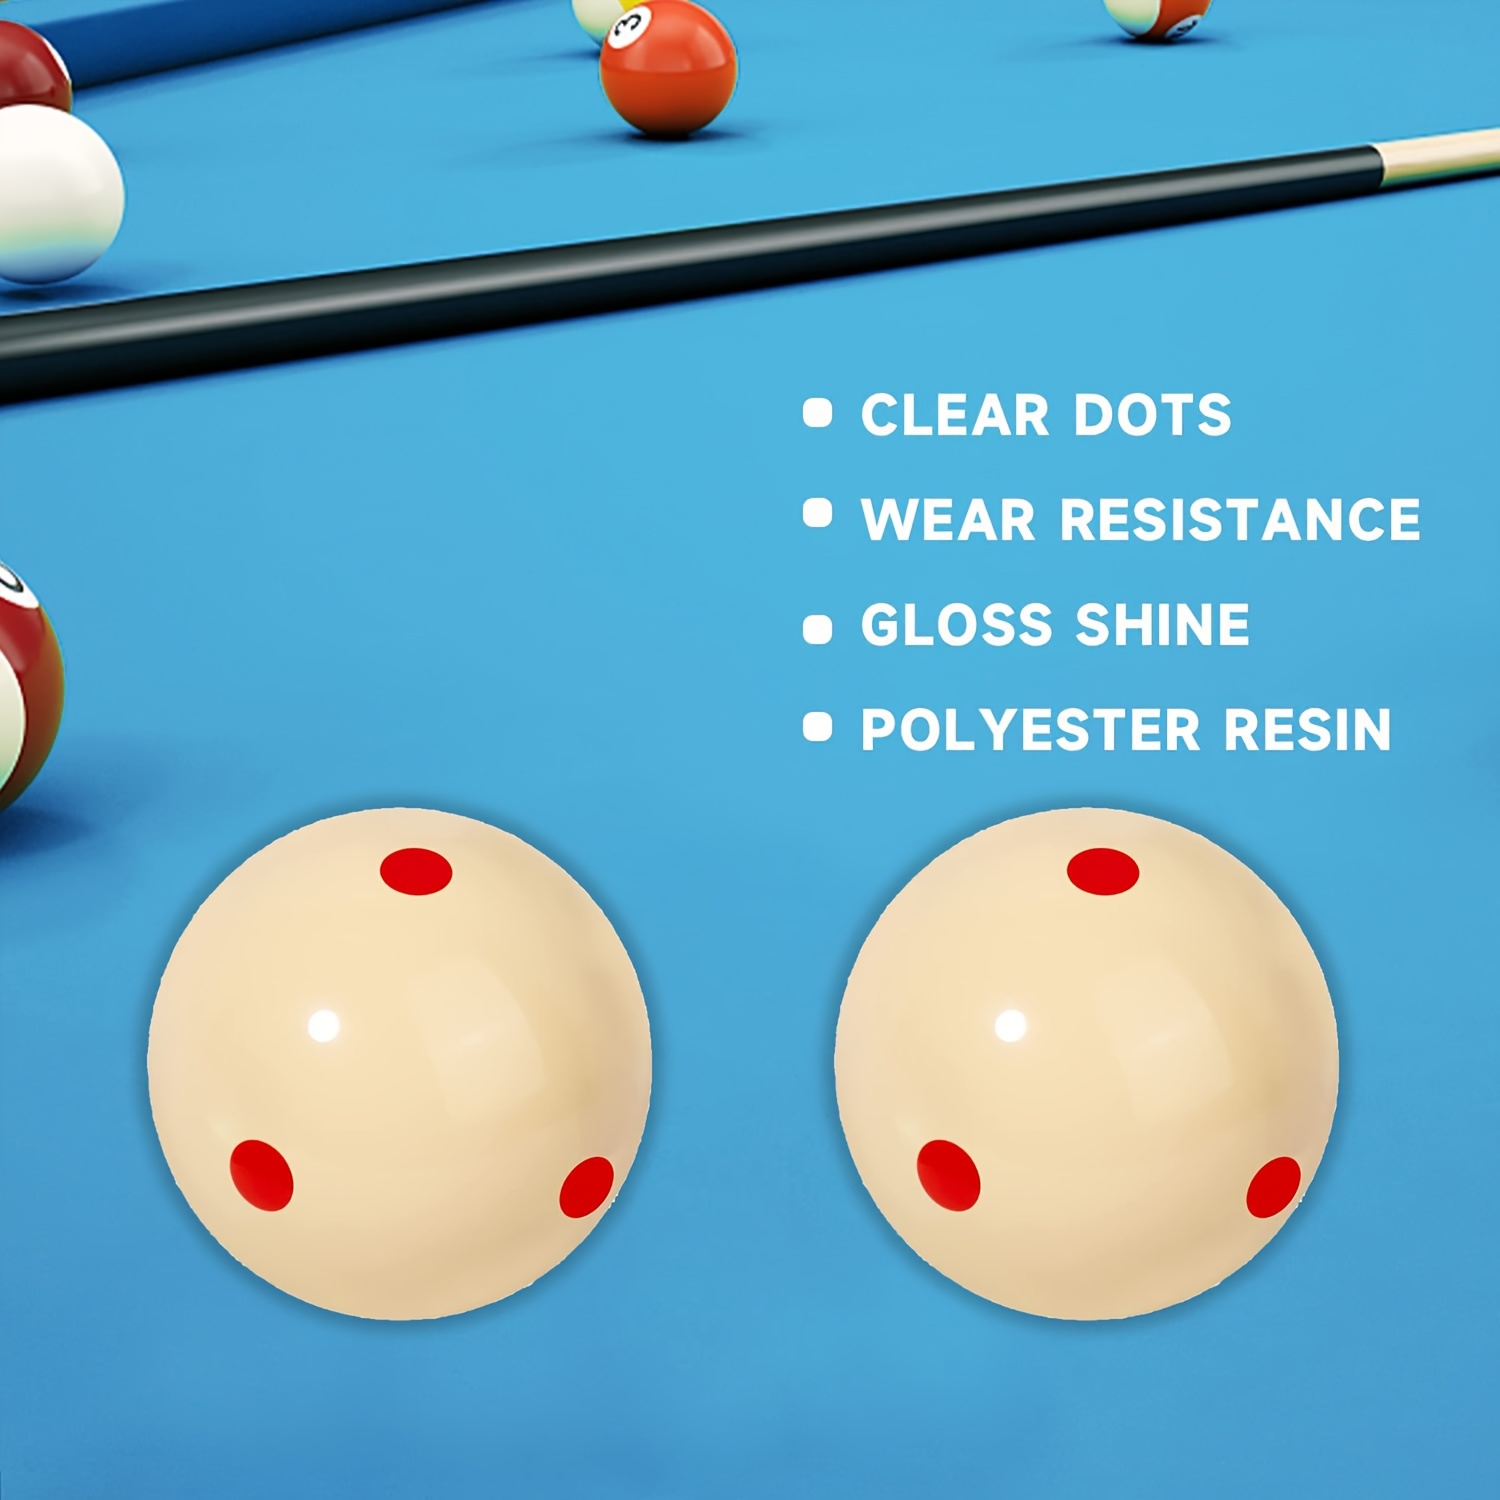 clear pool balls